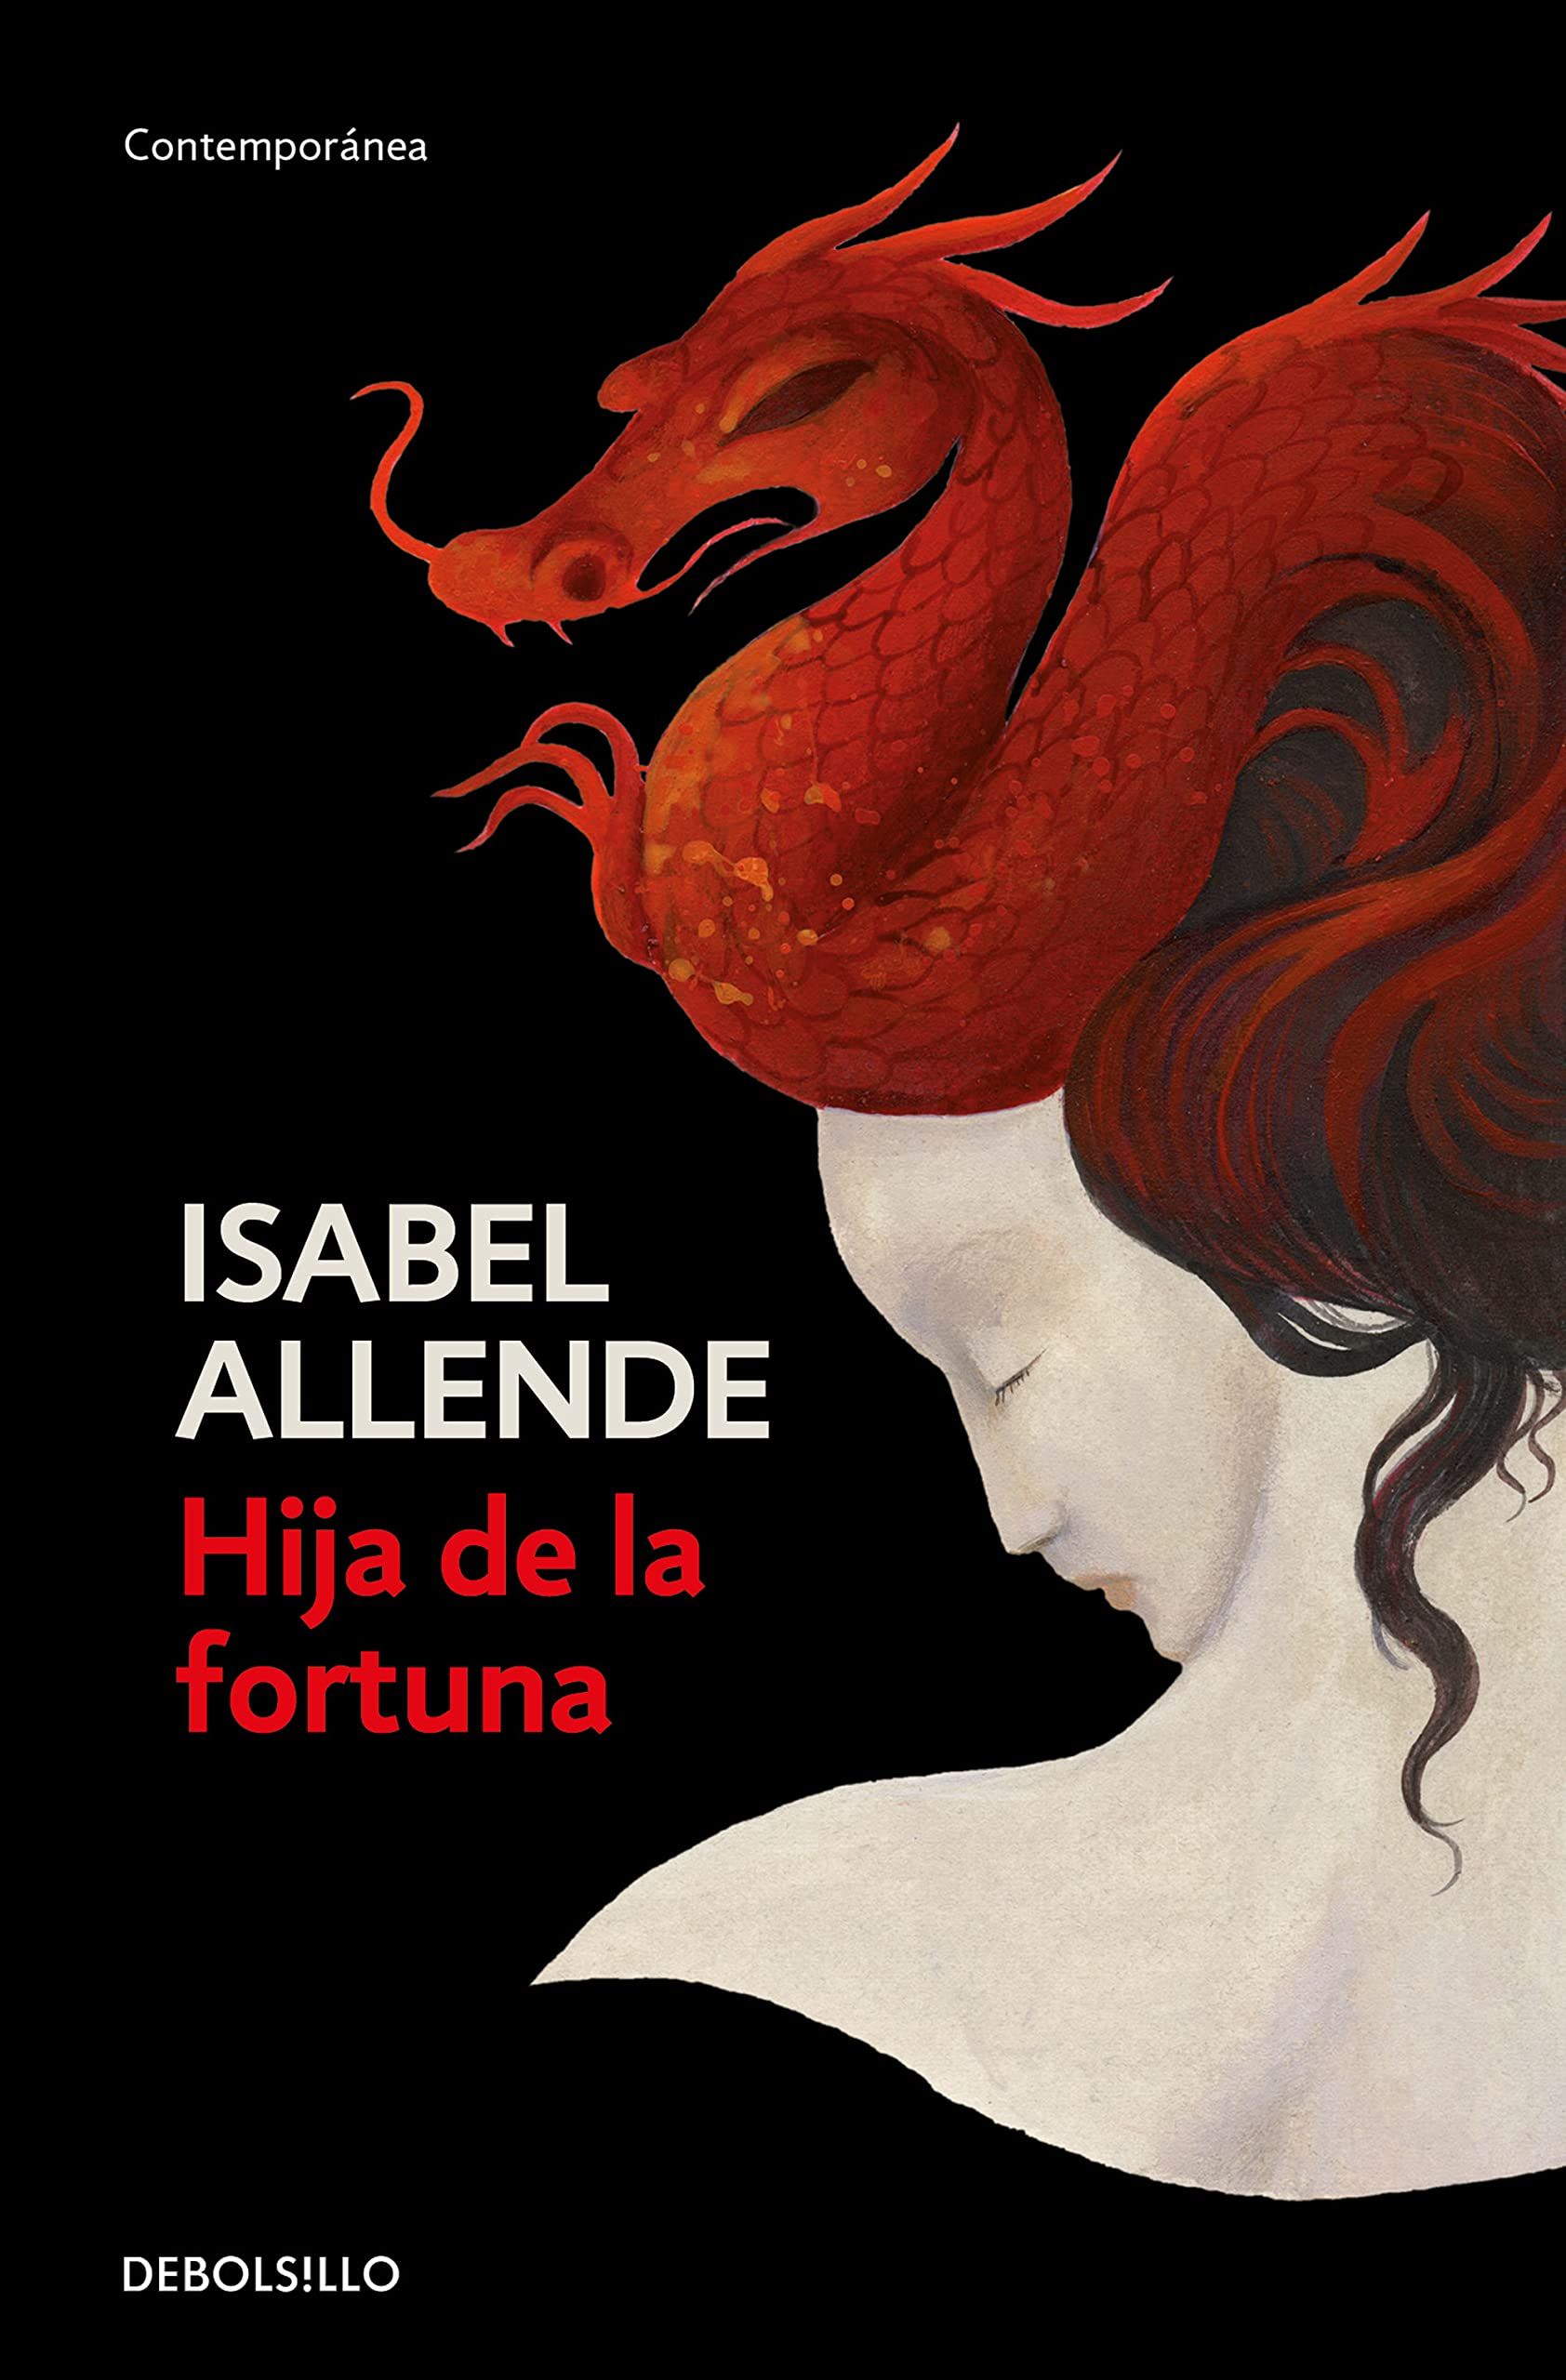 Allende I. Hija de la fortuna 